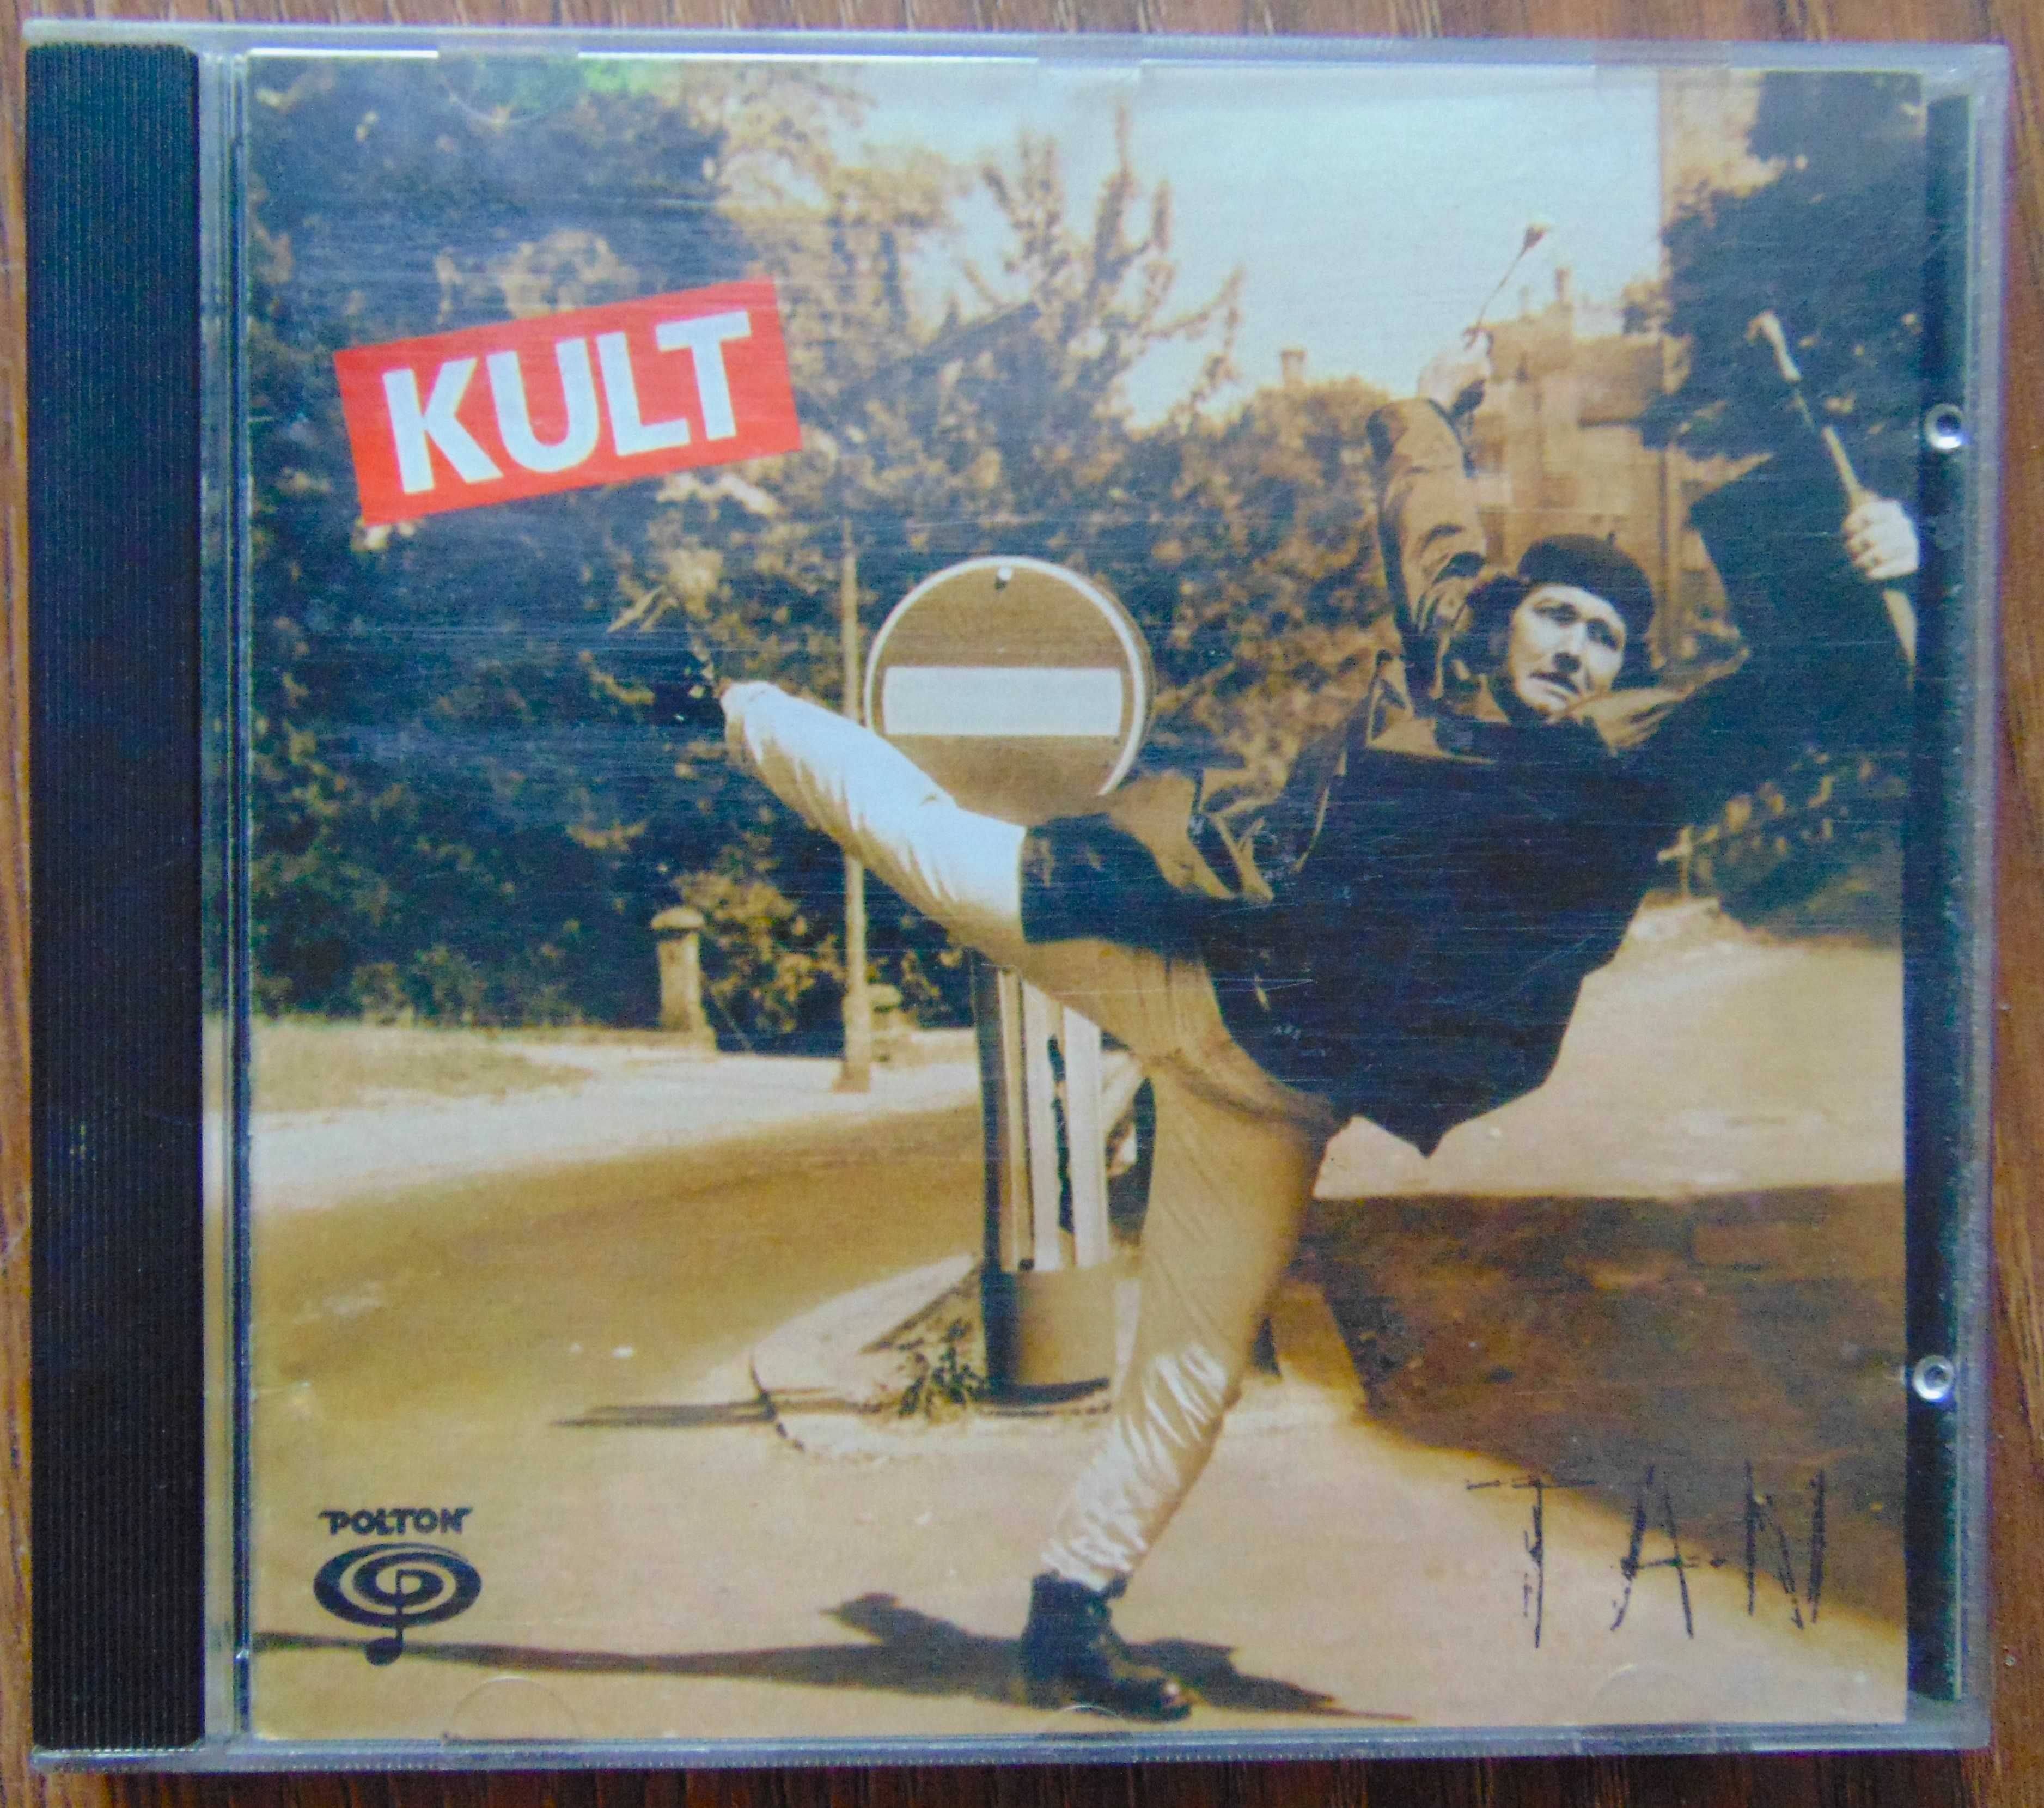 Kult - Tan, CD, Polton 1993 r.